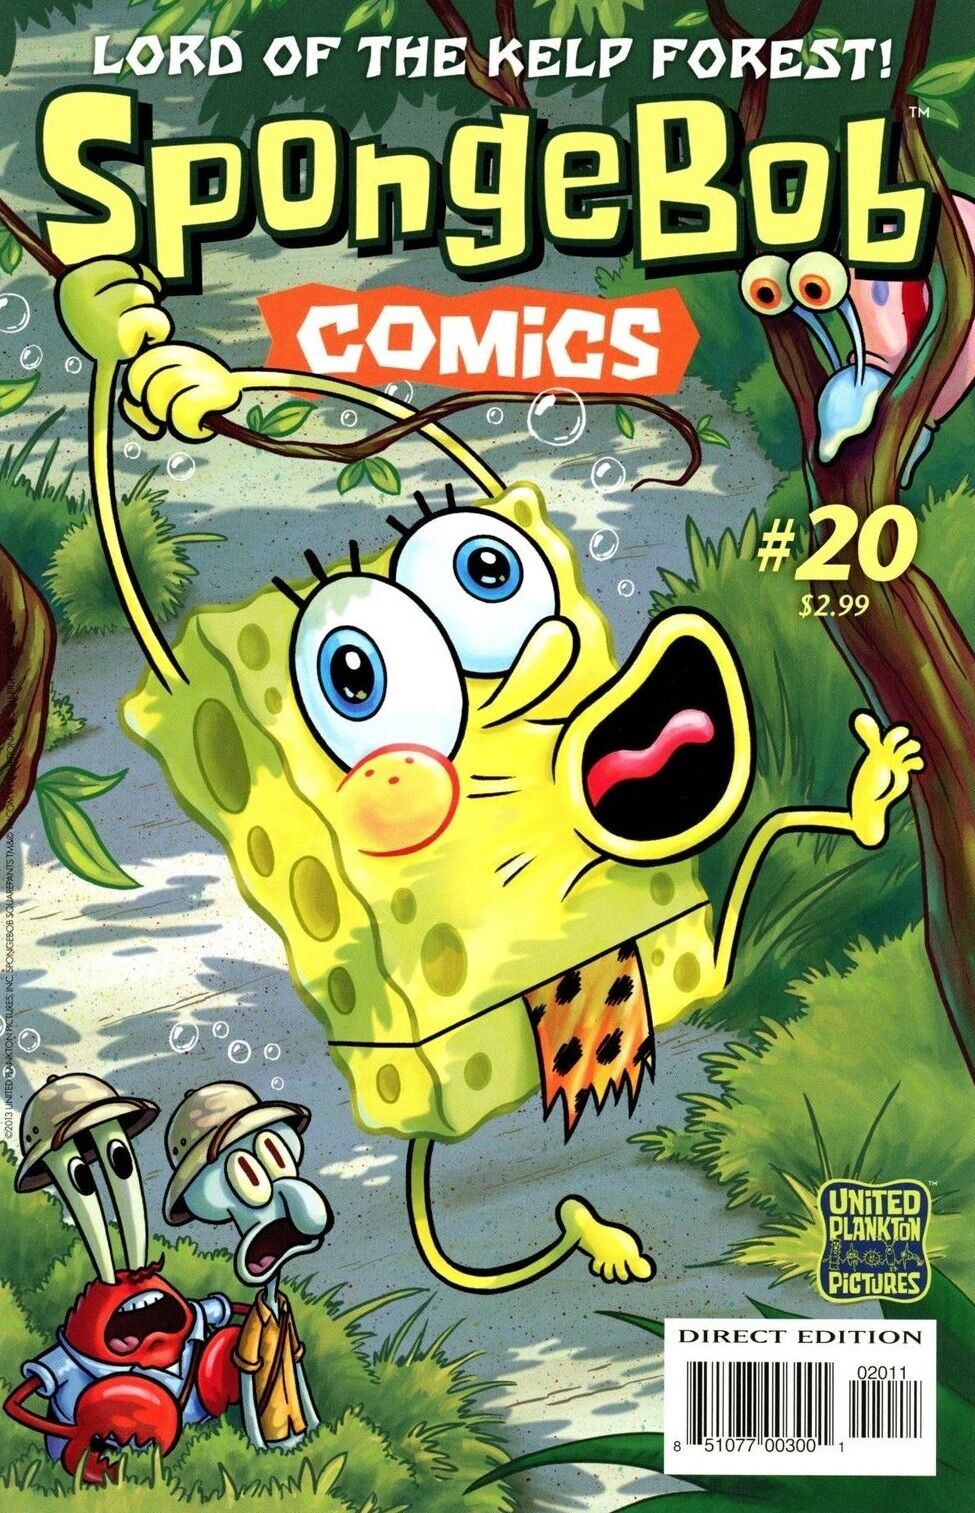 Spongebob Comics #20 VF/NM; United Plankton Pictures | we combine shipping